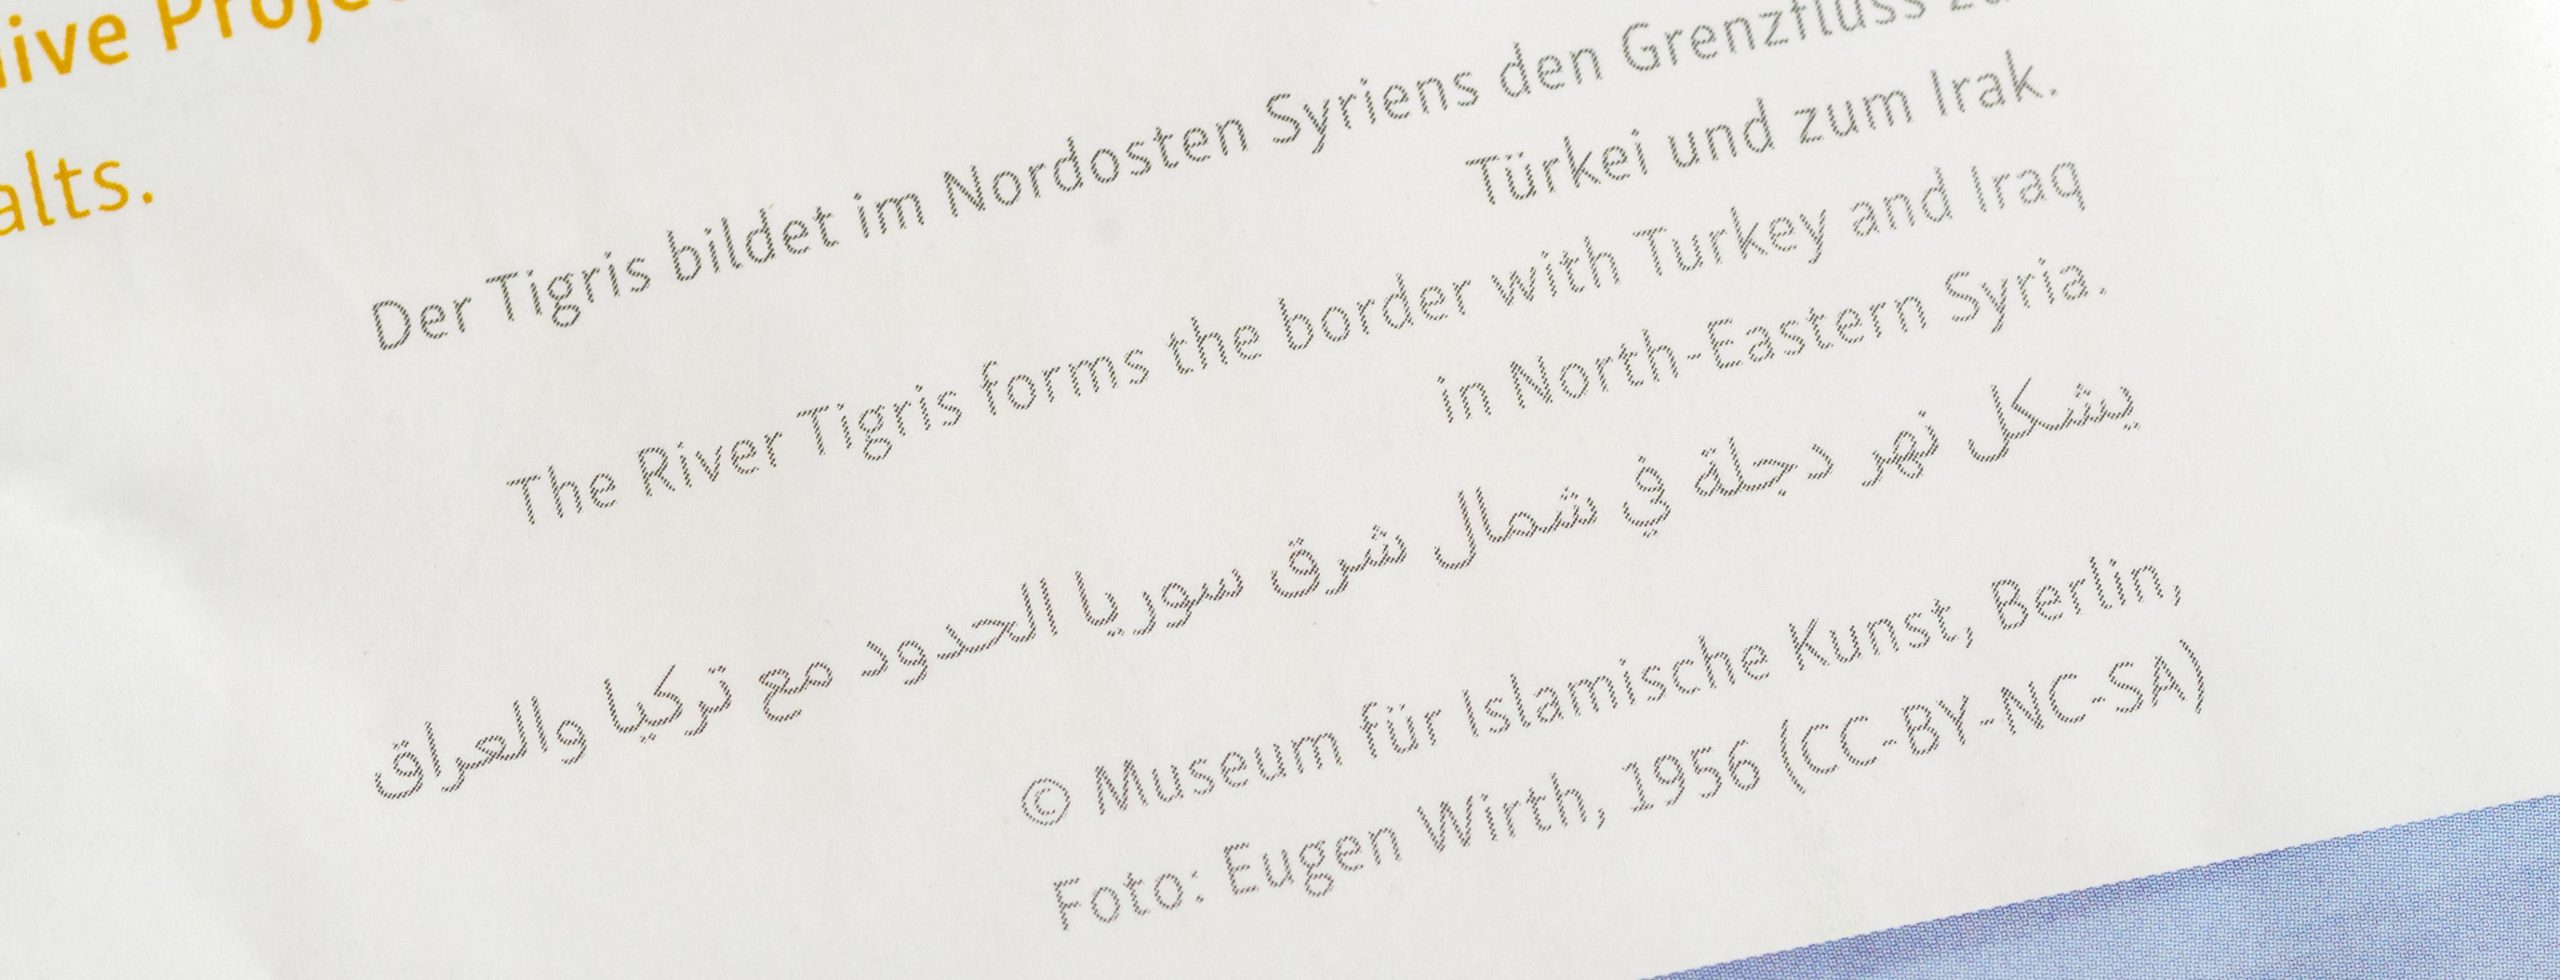 SkolarSansAr on Museum für Islamische Kunst Berlin folder 4